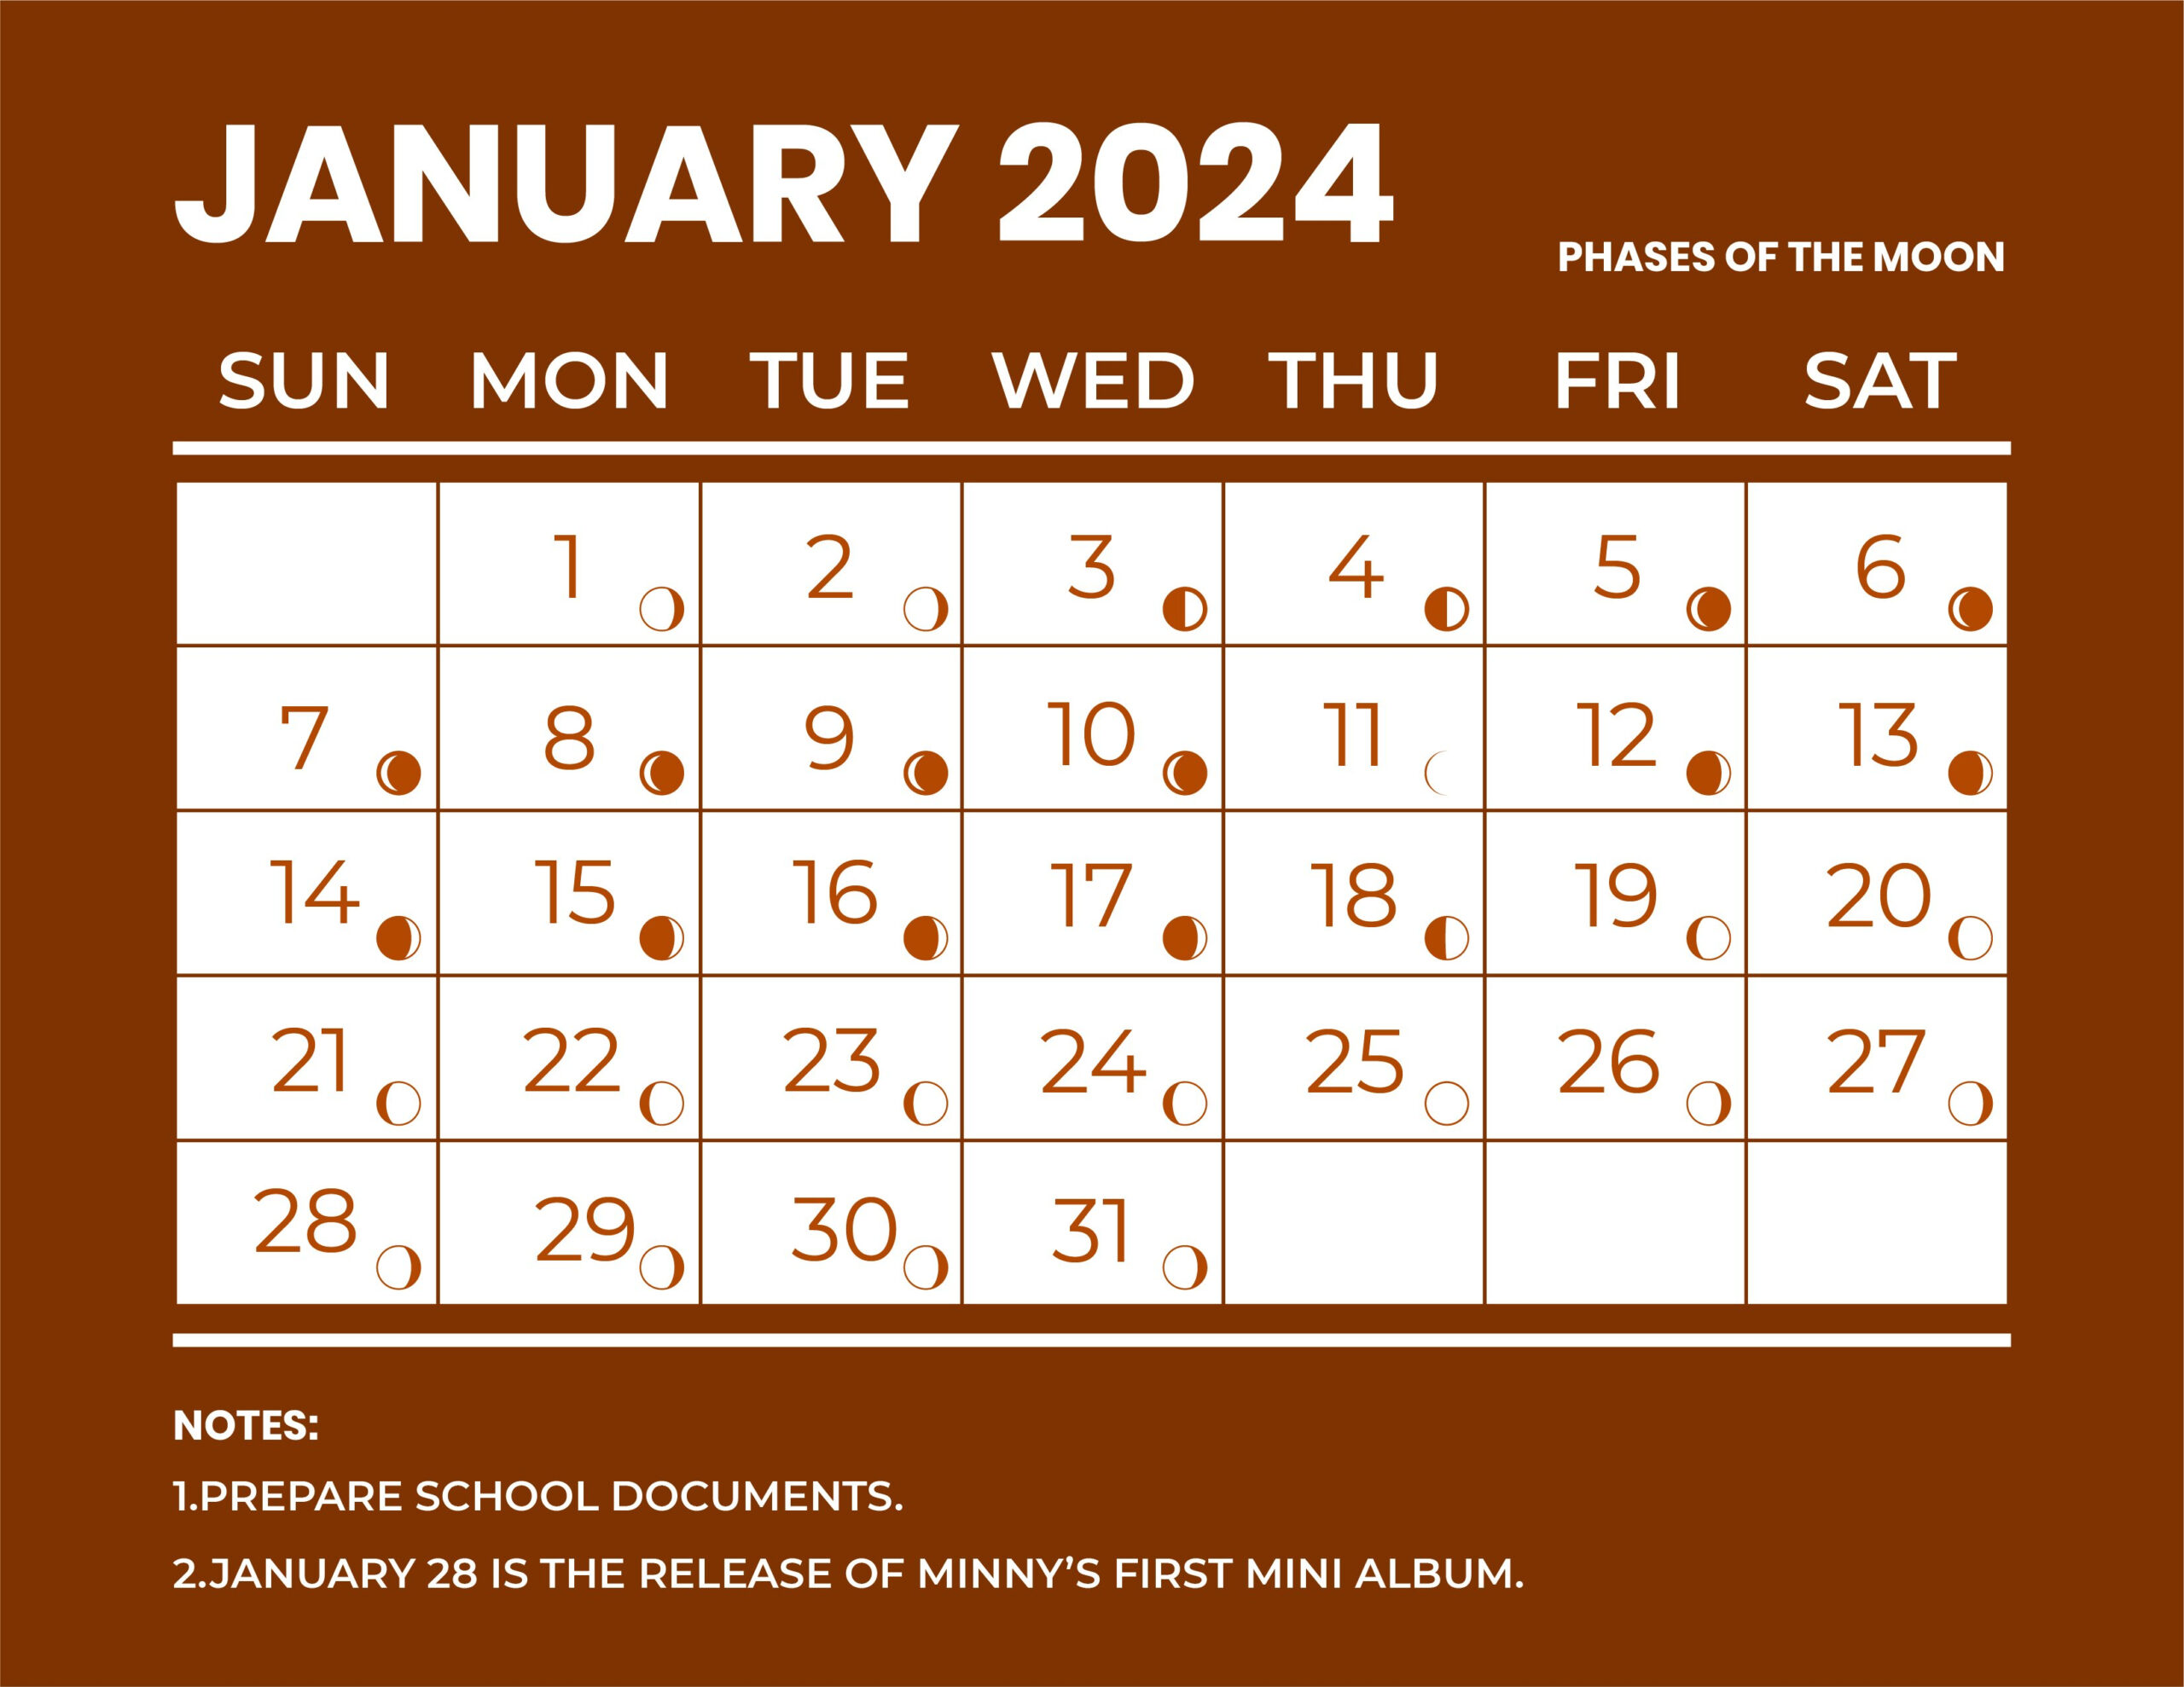 January 2024 Calendar With Moon Phases - Word, Illustrator, Eps for Moon Phase Calendar 2024 Printable